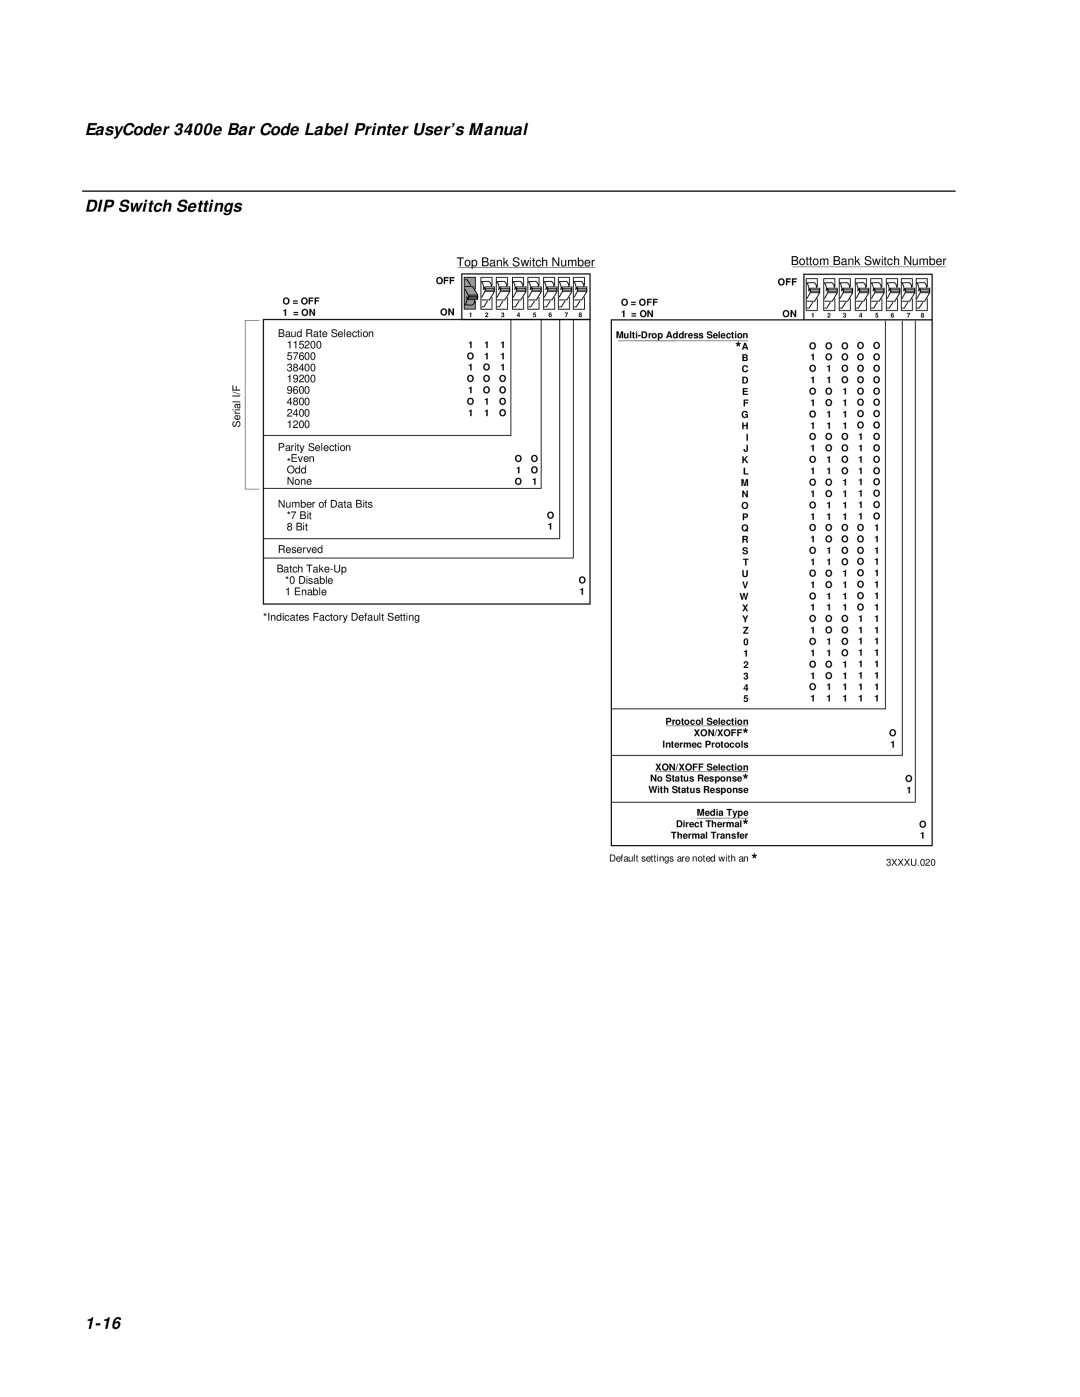 IBM user manual EasyCoder 3400e Bar Code Label Printer User’s Manual, DIP Switch Settings, 1-16, Top Bank Switch Number 